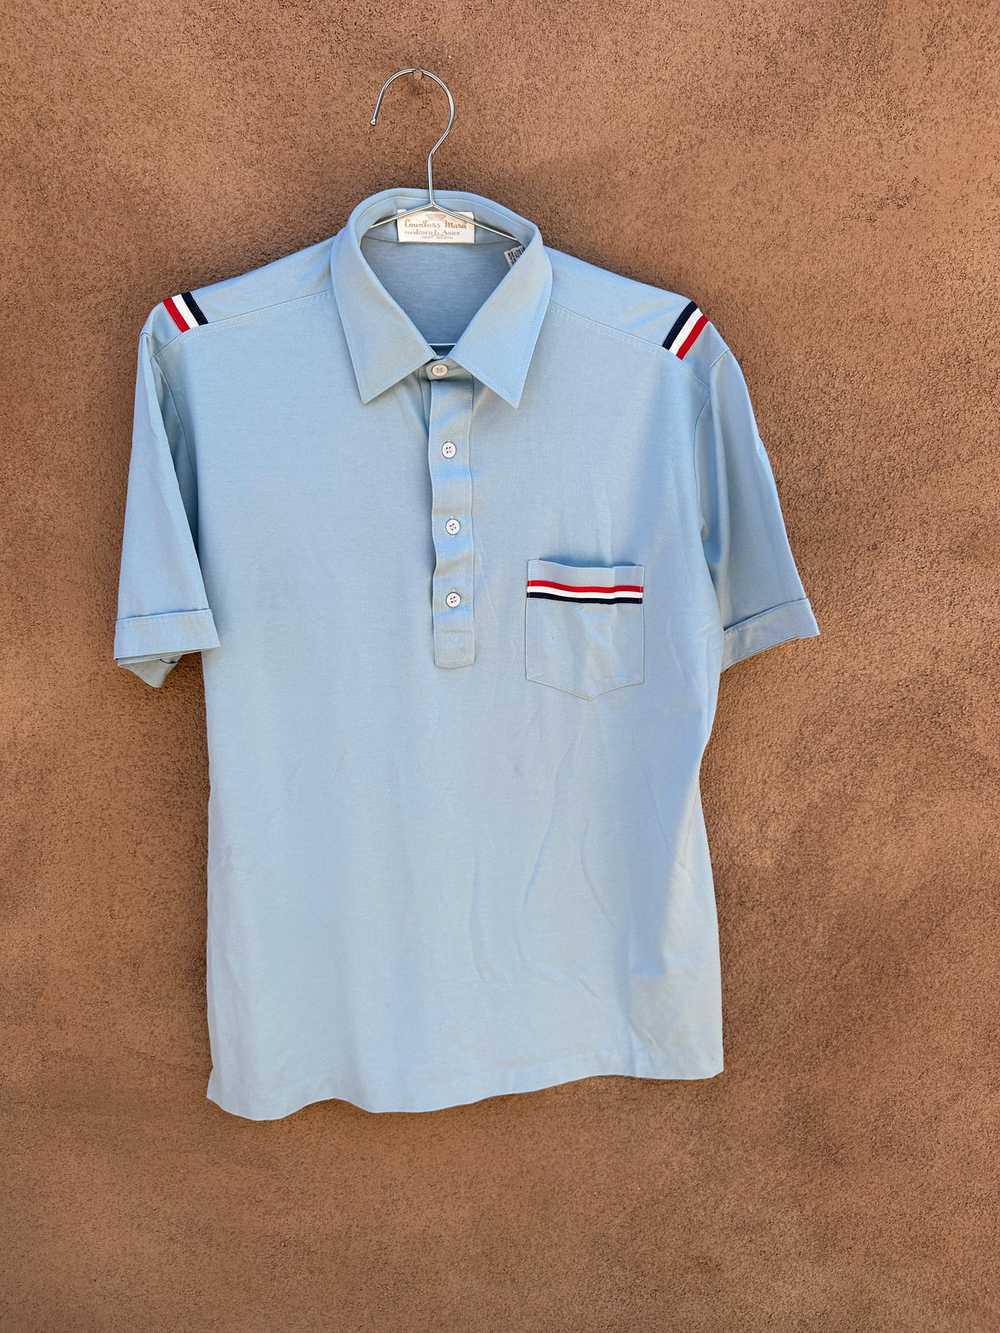 1960's Polo Shirt - Countess Mara for John Ashe - image 1